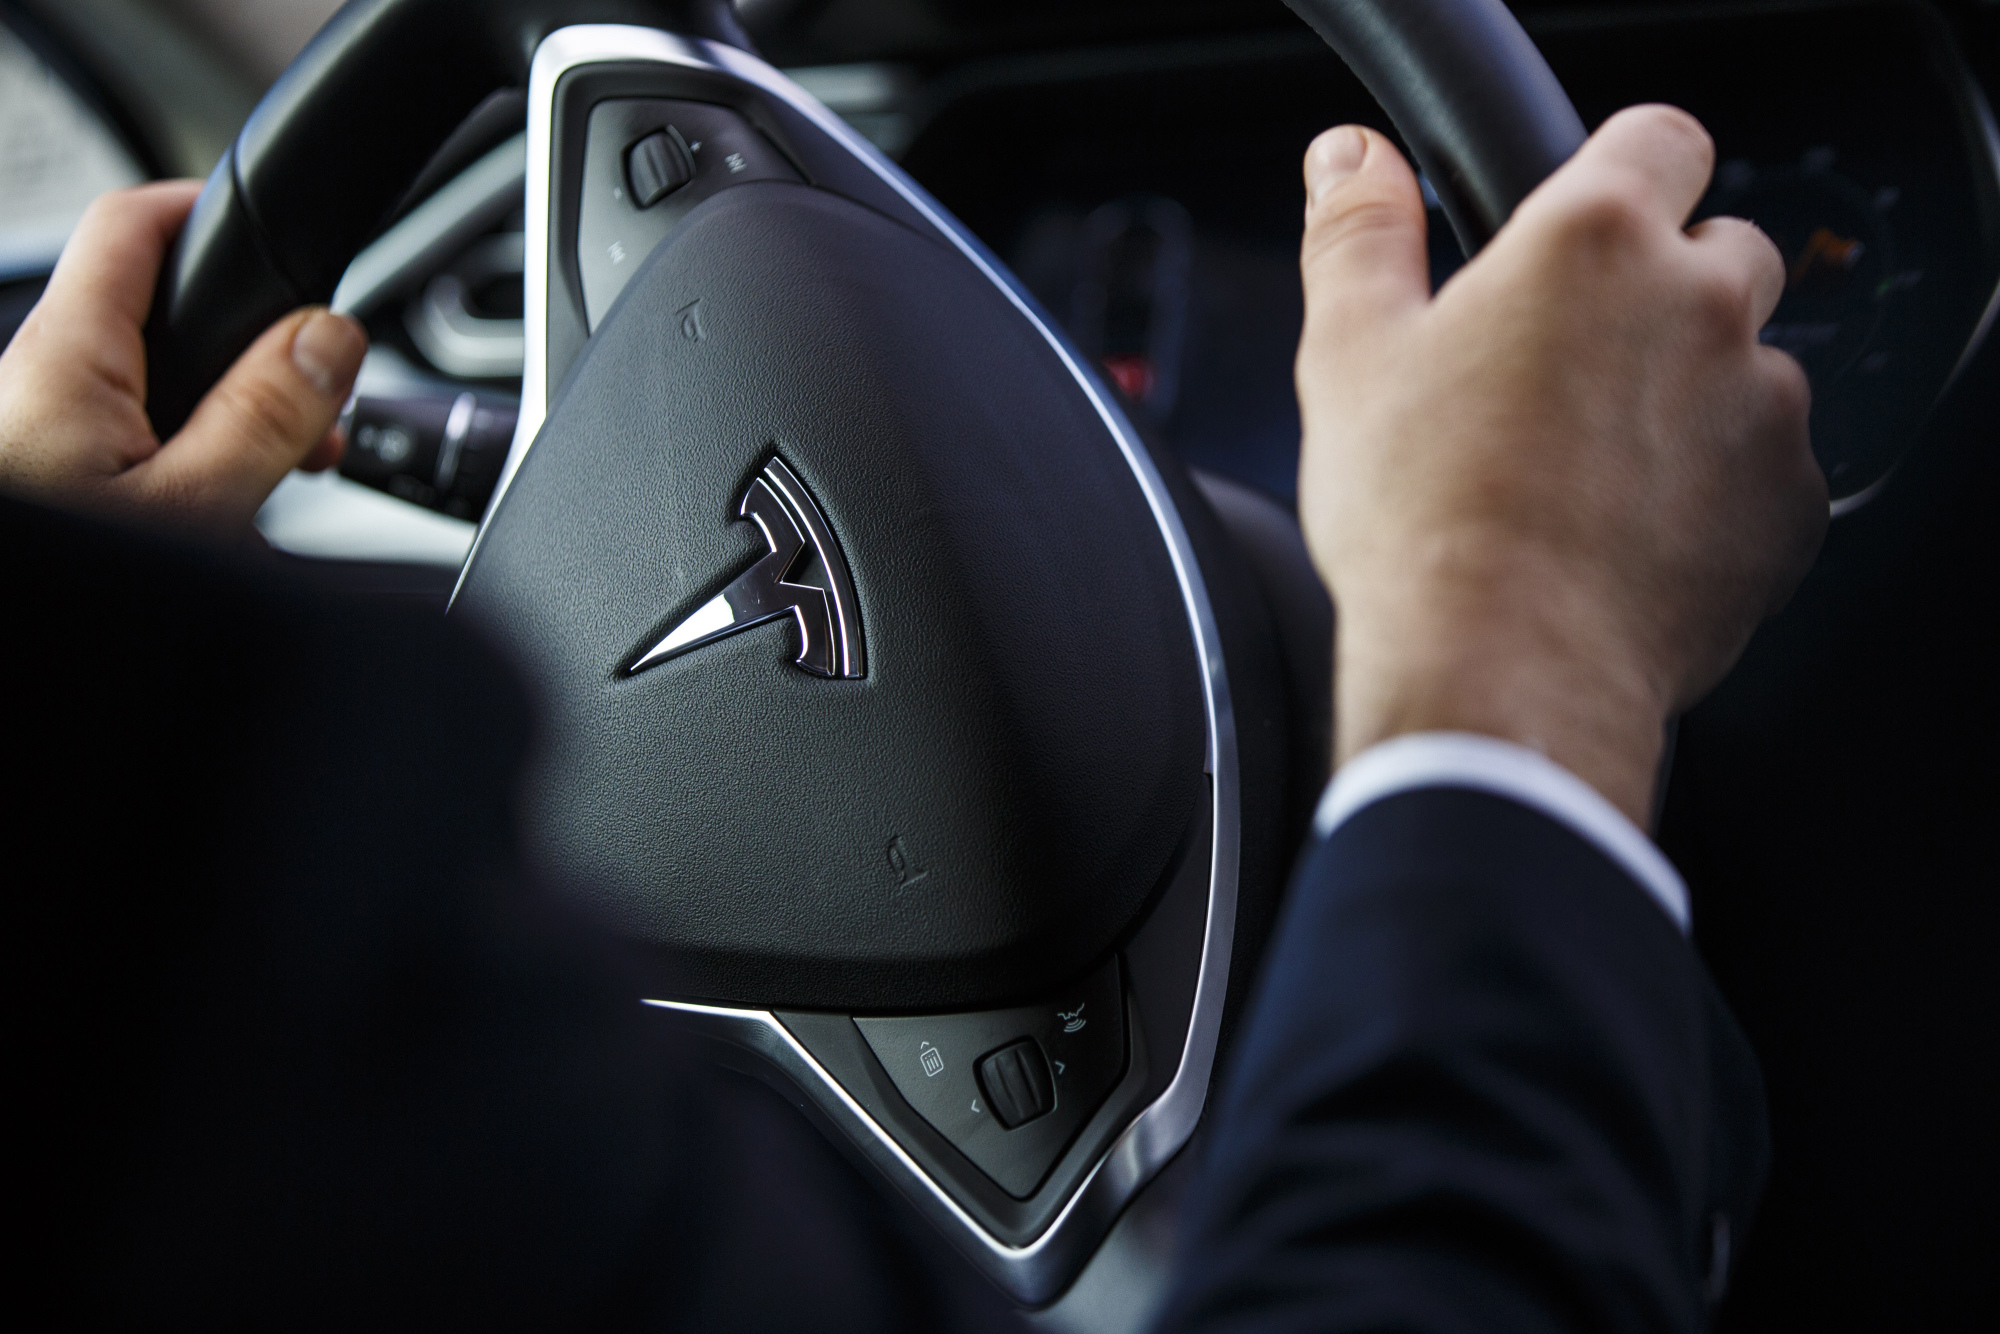 The Tesla logo on&nbsp;the steering wheel of an Uber Tesla Model S electric automobile.